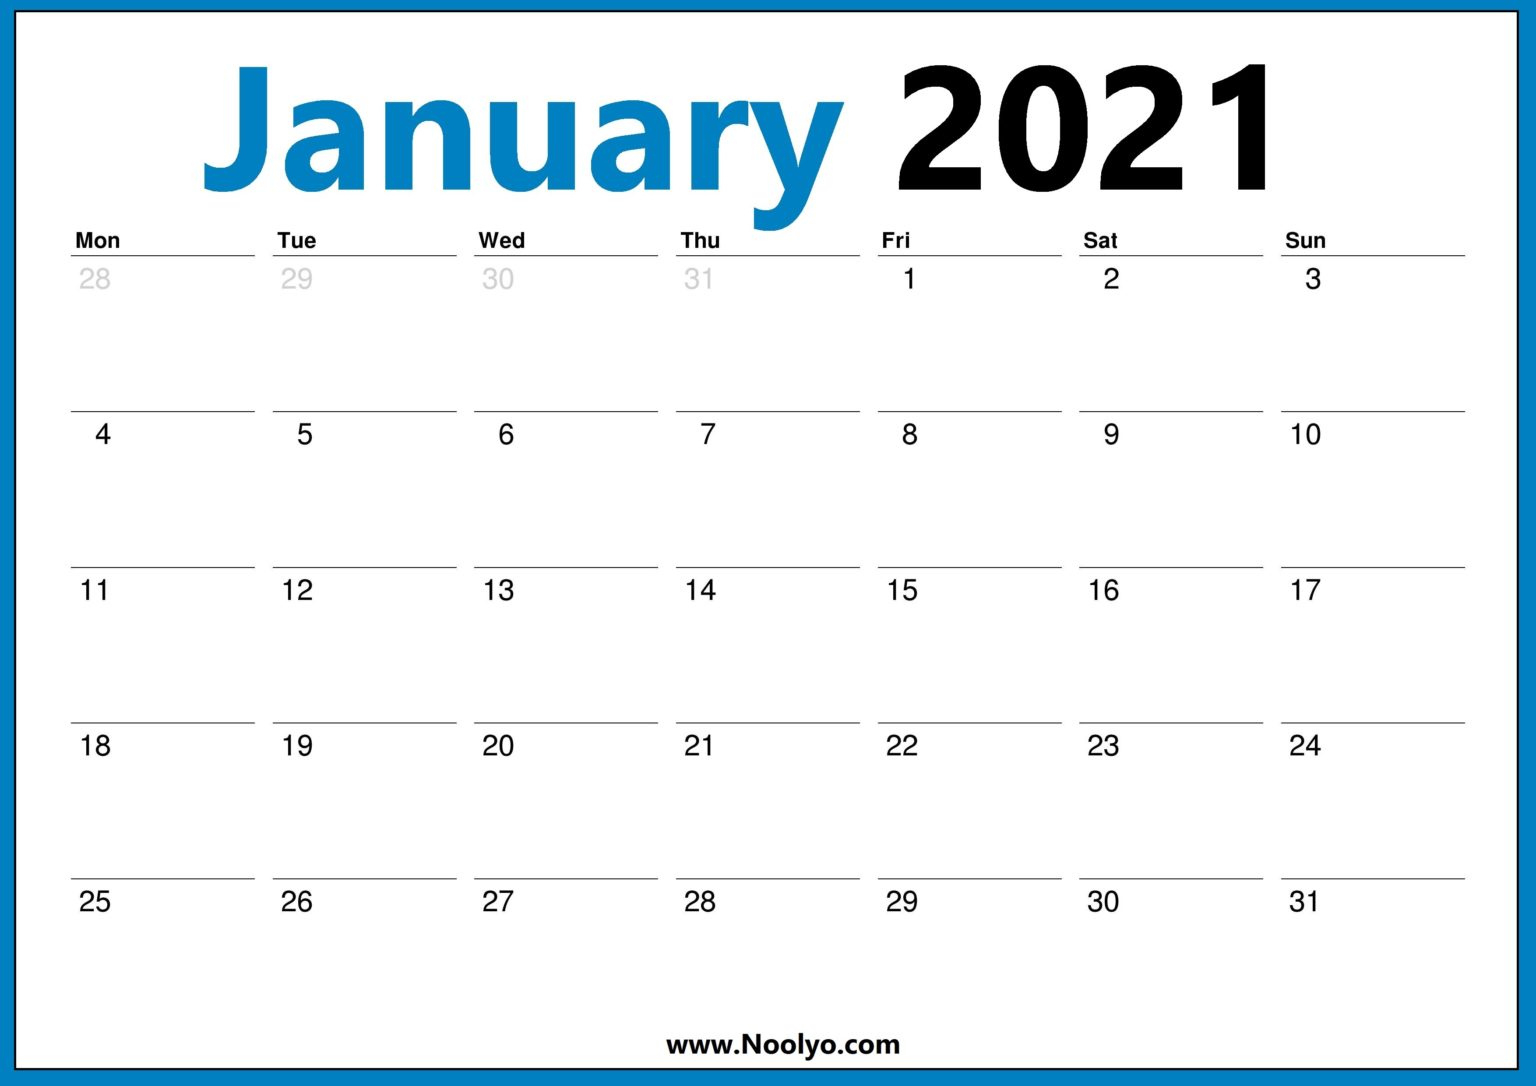 January 2021 Calendar Monday Start - Noolyo December 2021 Calendar Monday Start